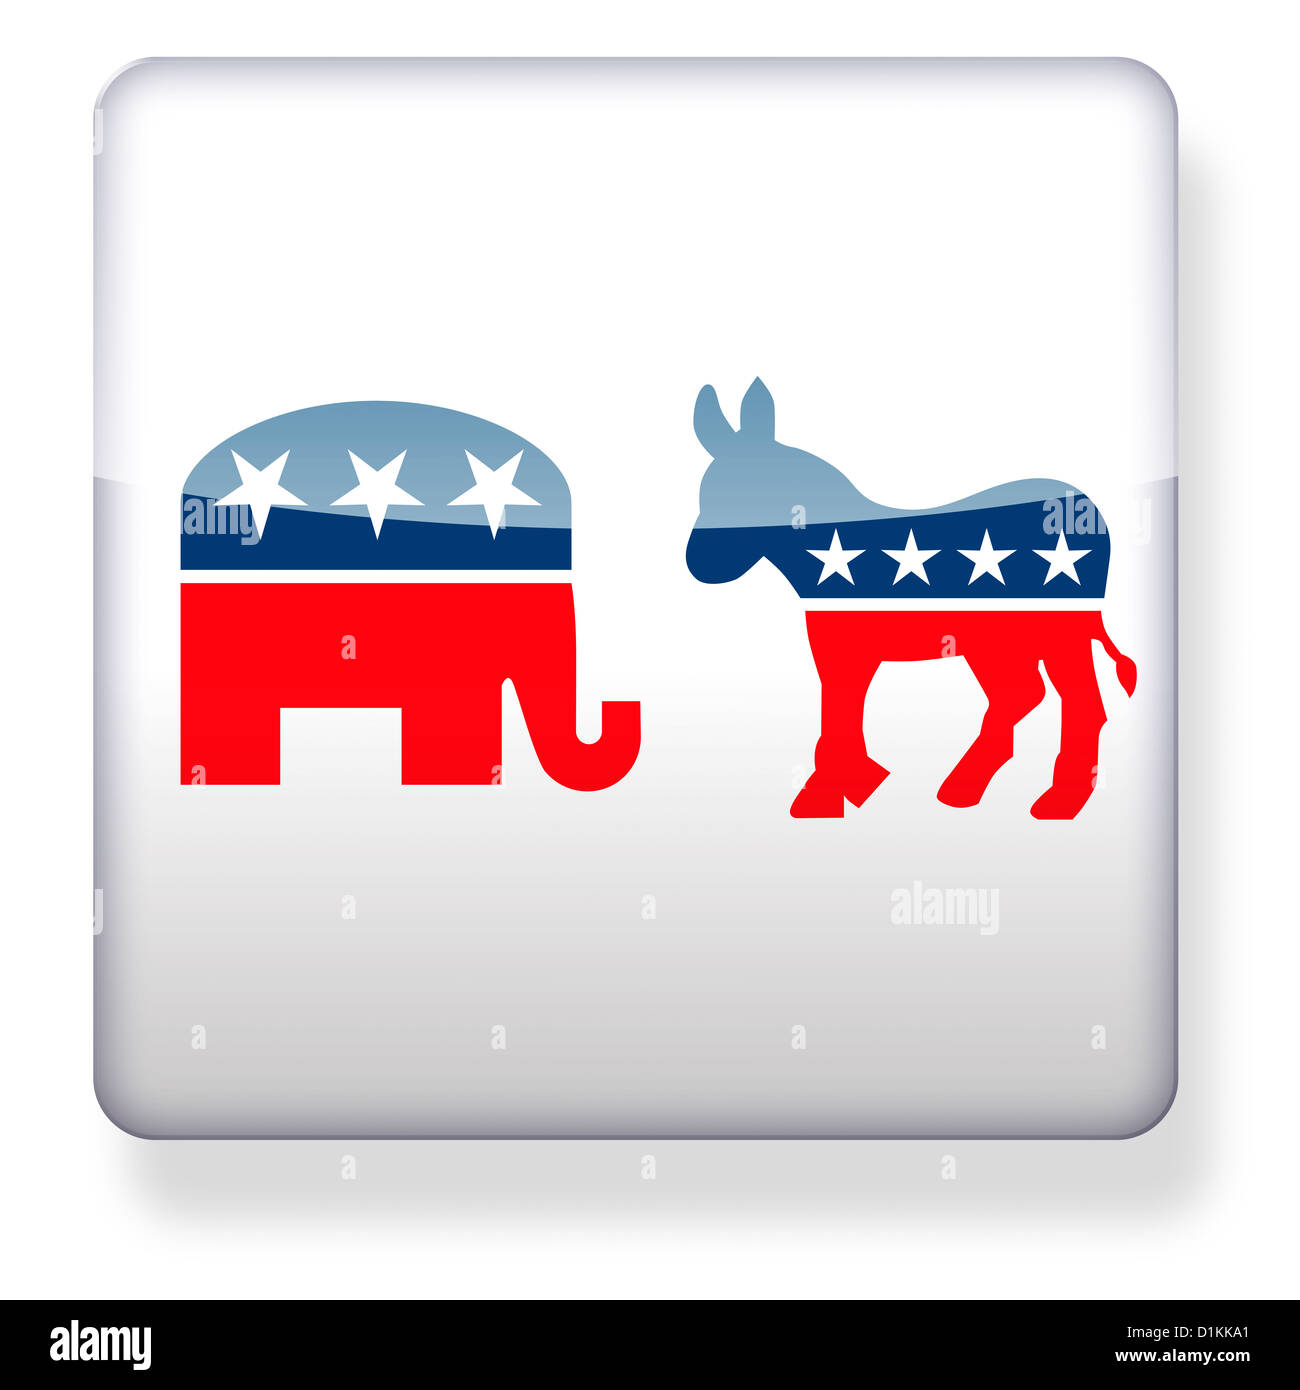 Republican elelphant and Democrat donkey political logos as an app icon Stock Photo